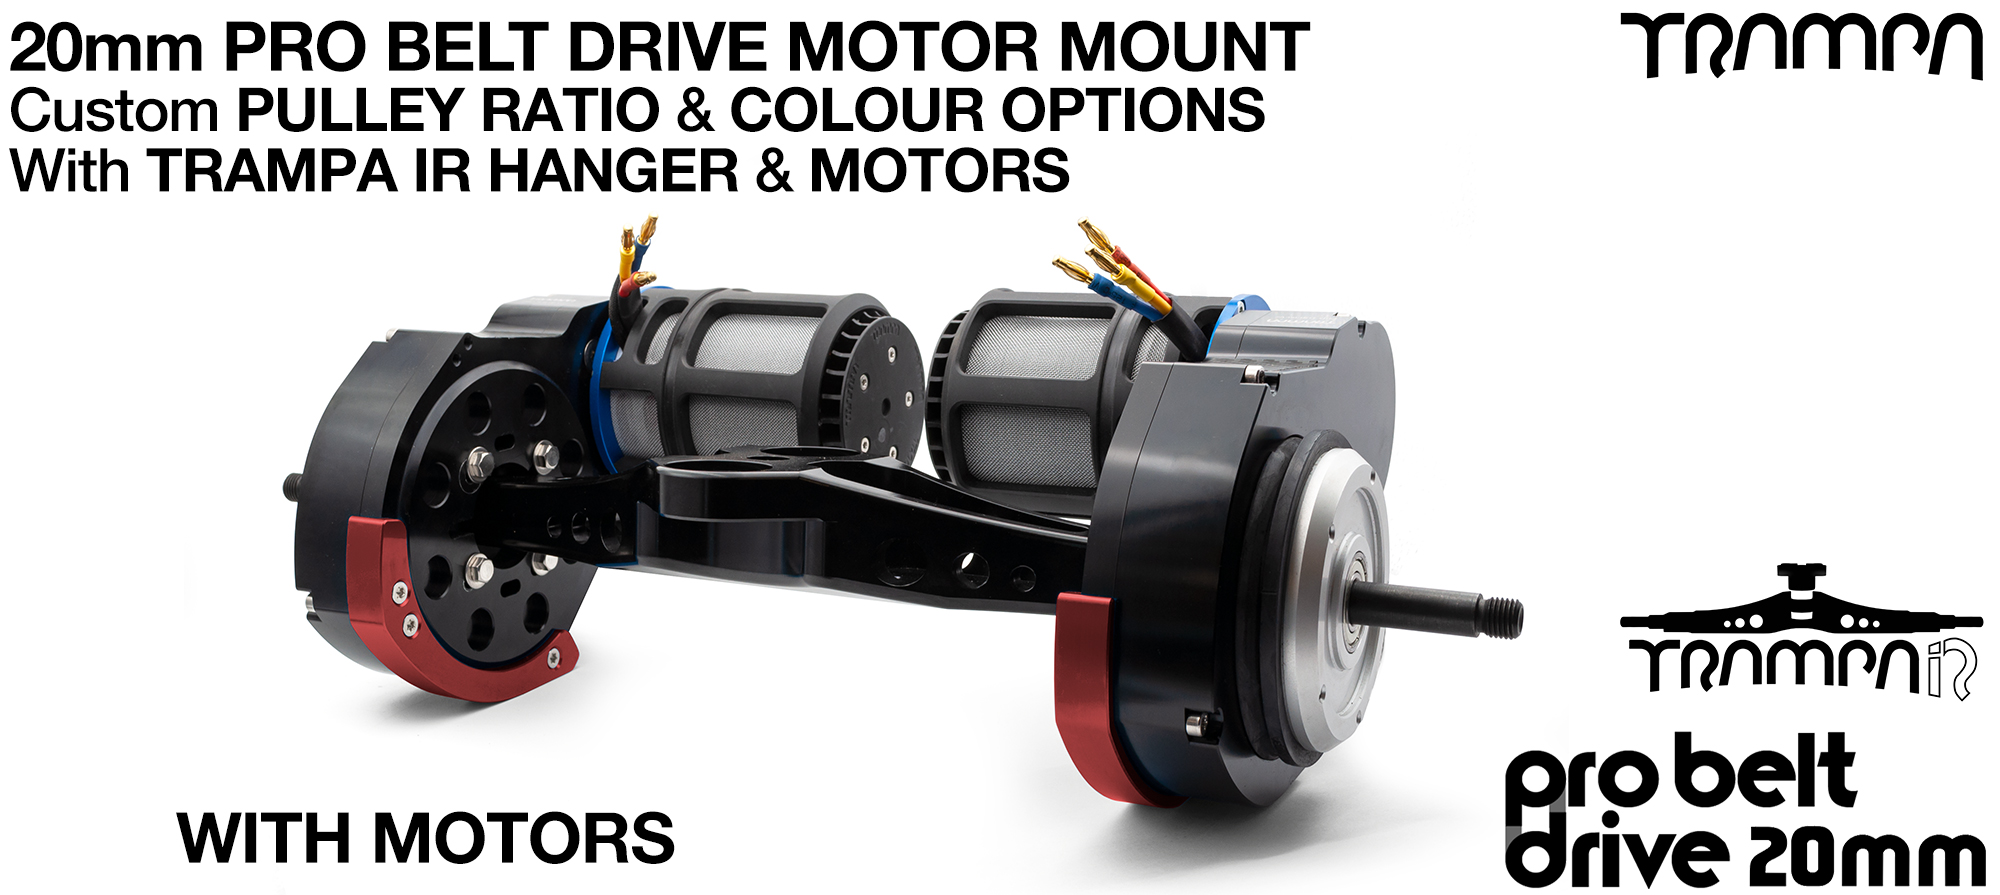 20mm PRO BELT DRIVE Motor Mounts MOTORS, PULLEYS & Motor PROTECTION FILTERS mounted on a CNC TRAMPA-IR Hanger 